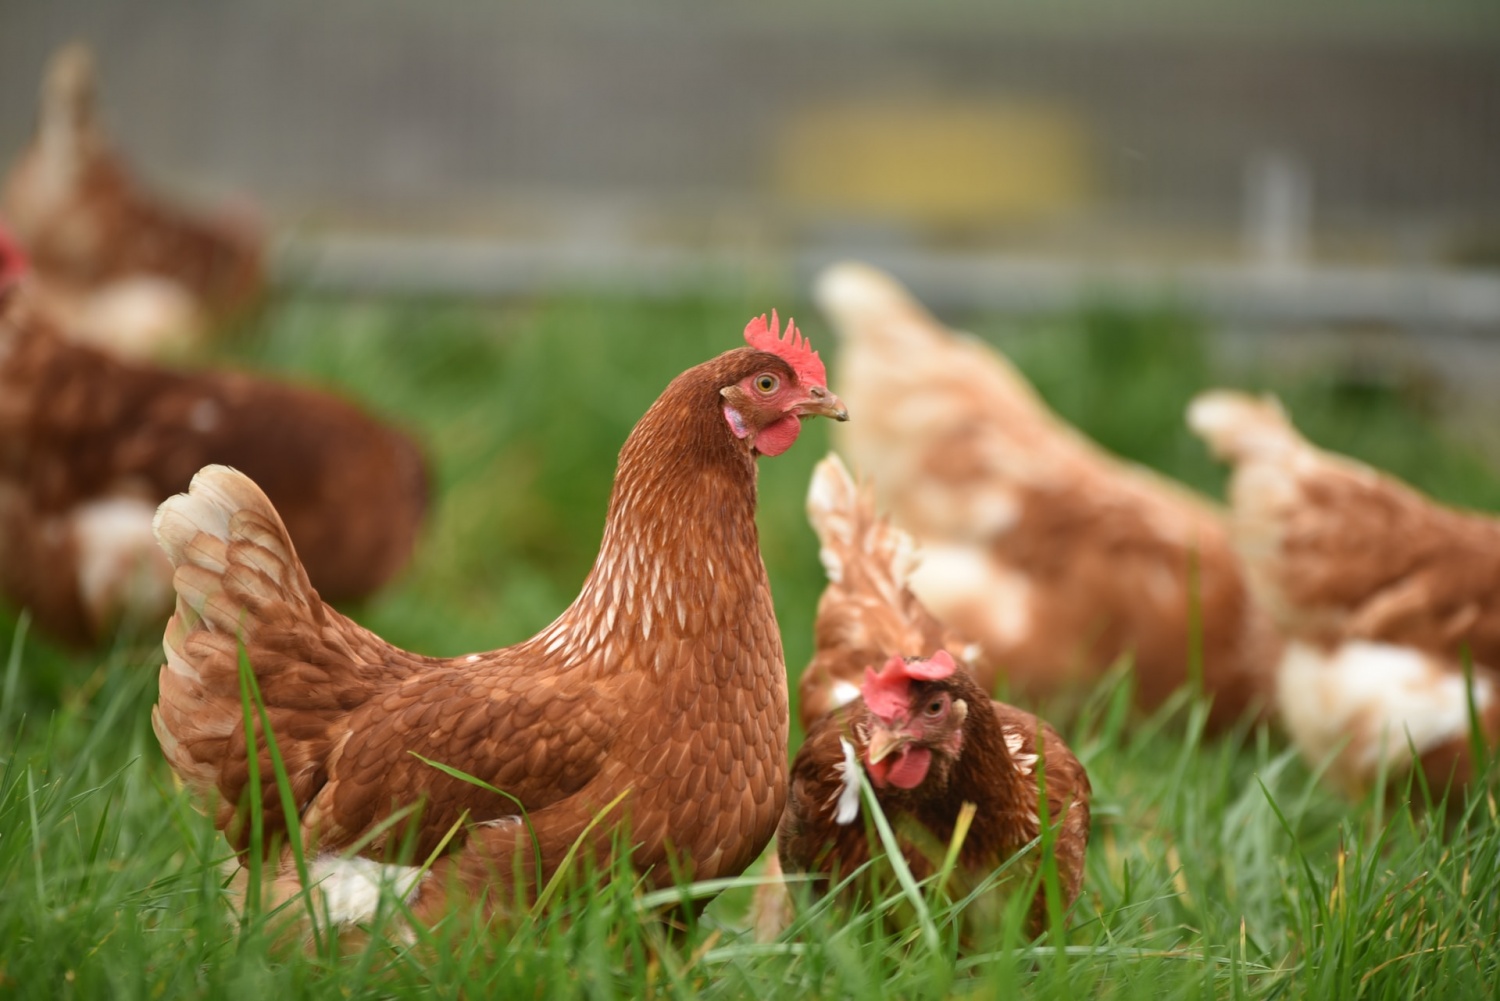 Human Gene Blocks Avian Flu Virus in Remarkable New Discovery